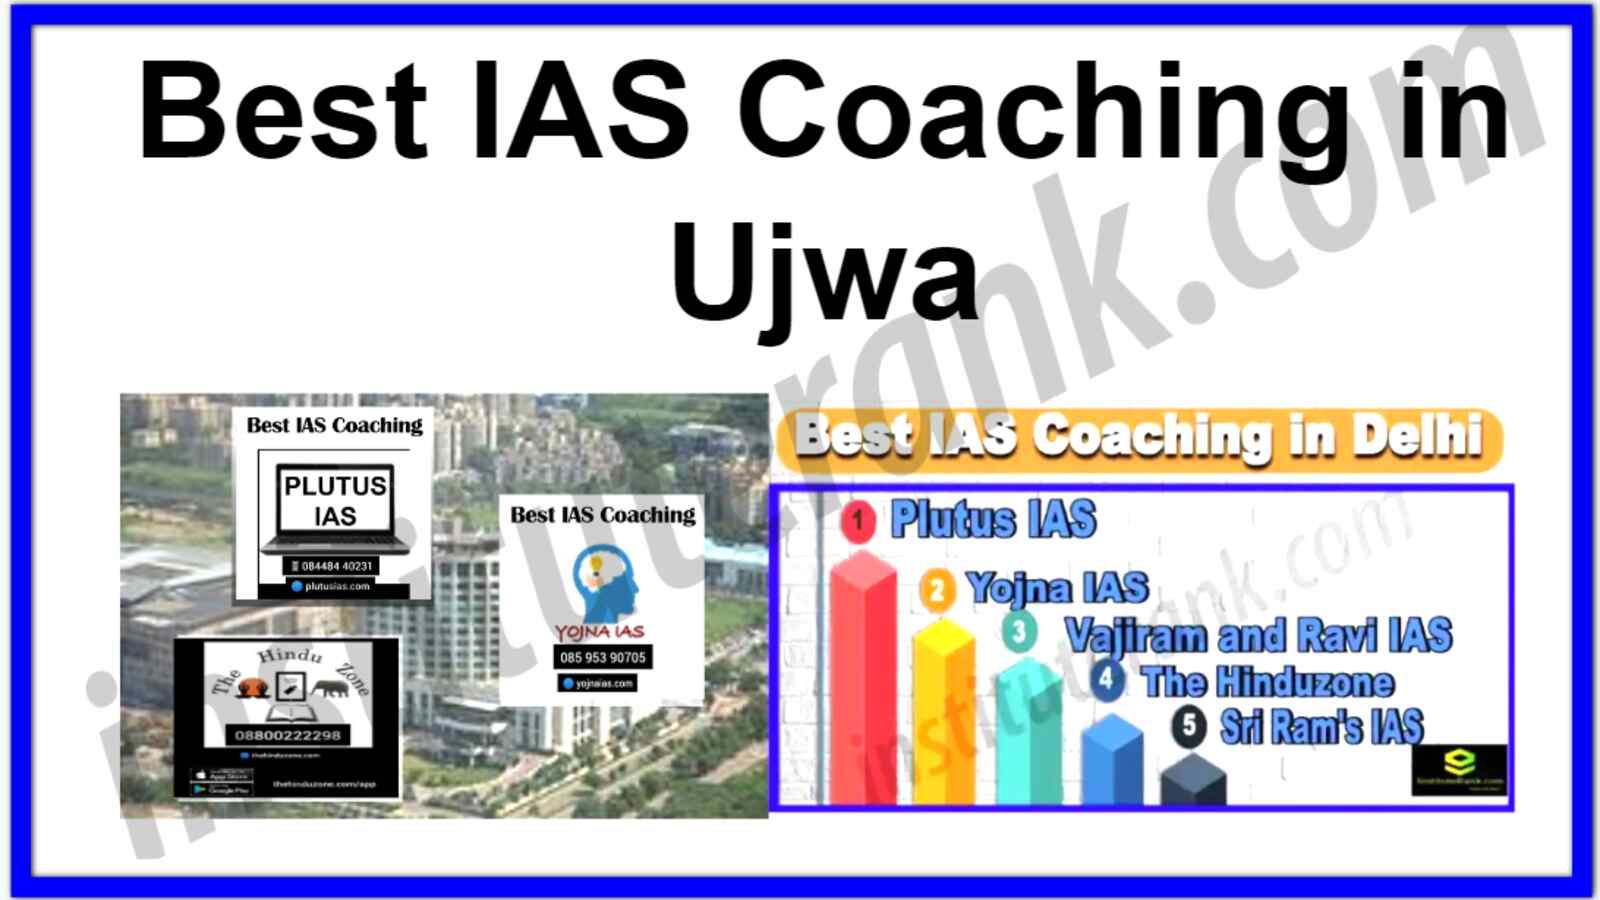 Best IAS Coaching in Ujwa